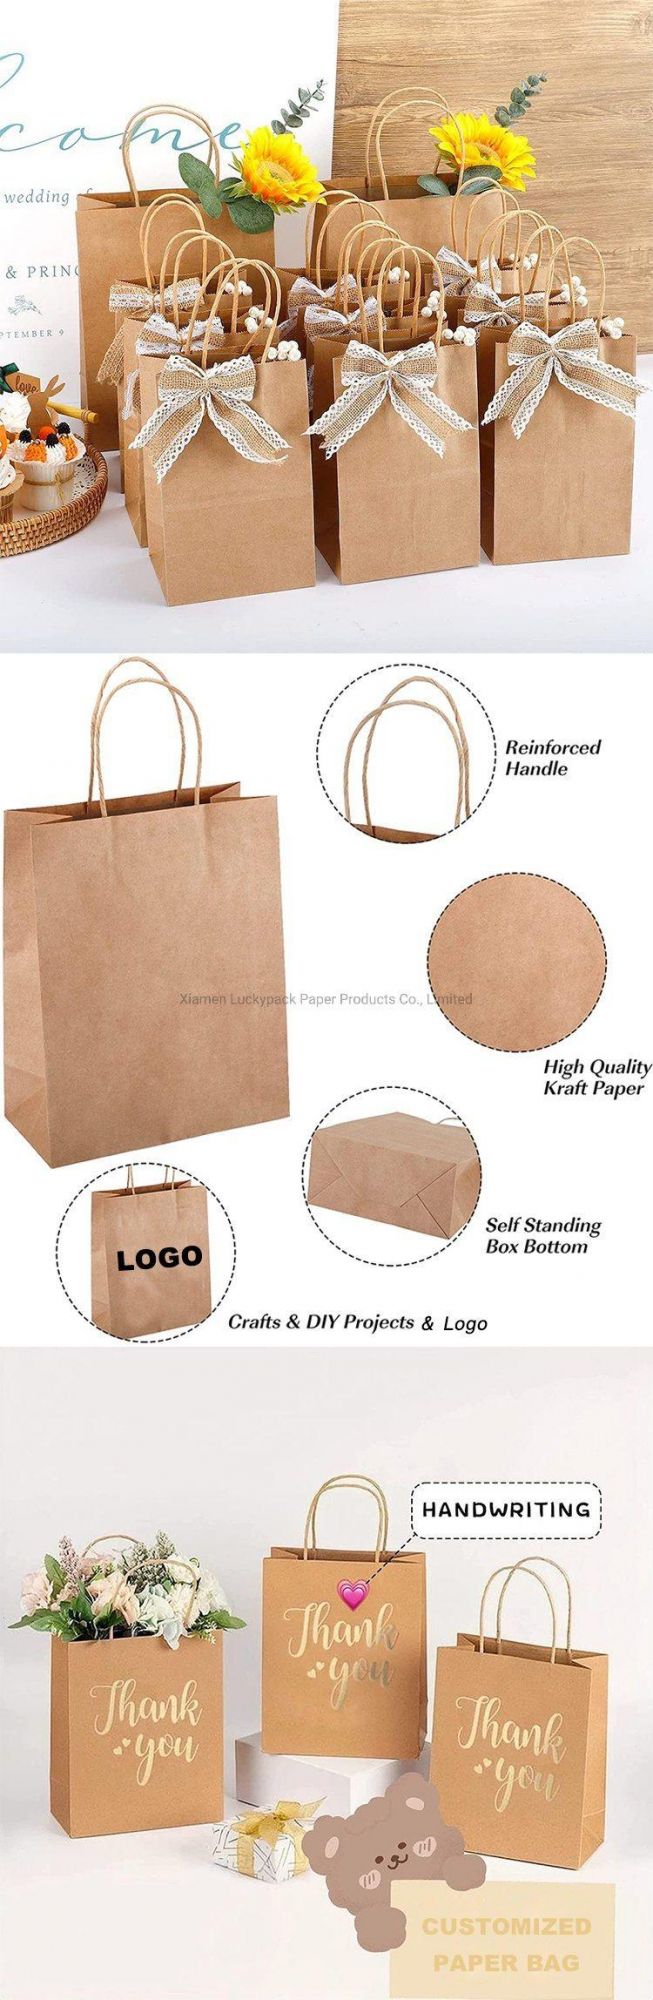 Printed Black Brown White Paper Packaging Shopping Gift Bag